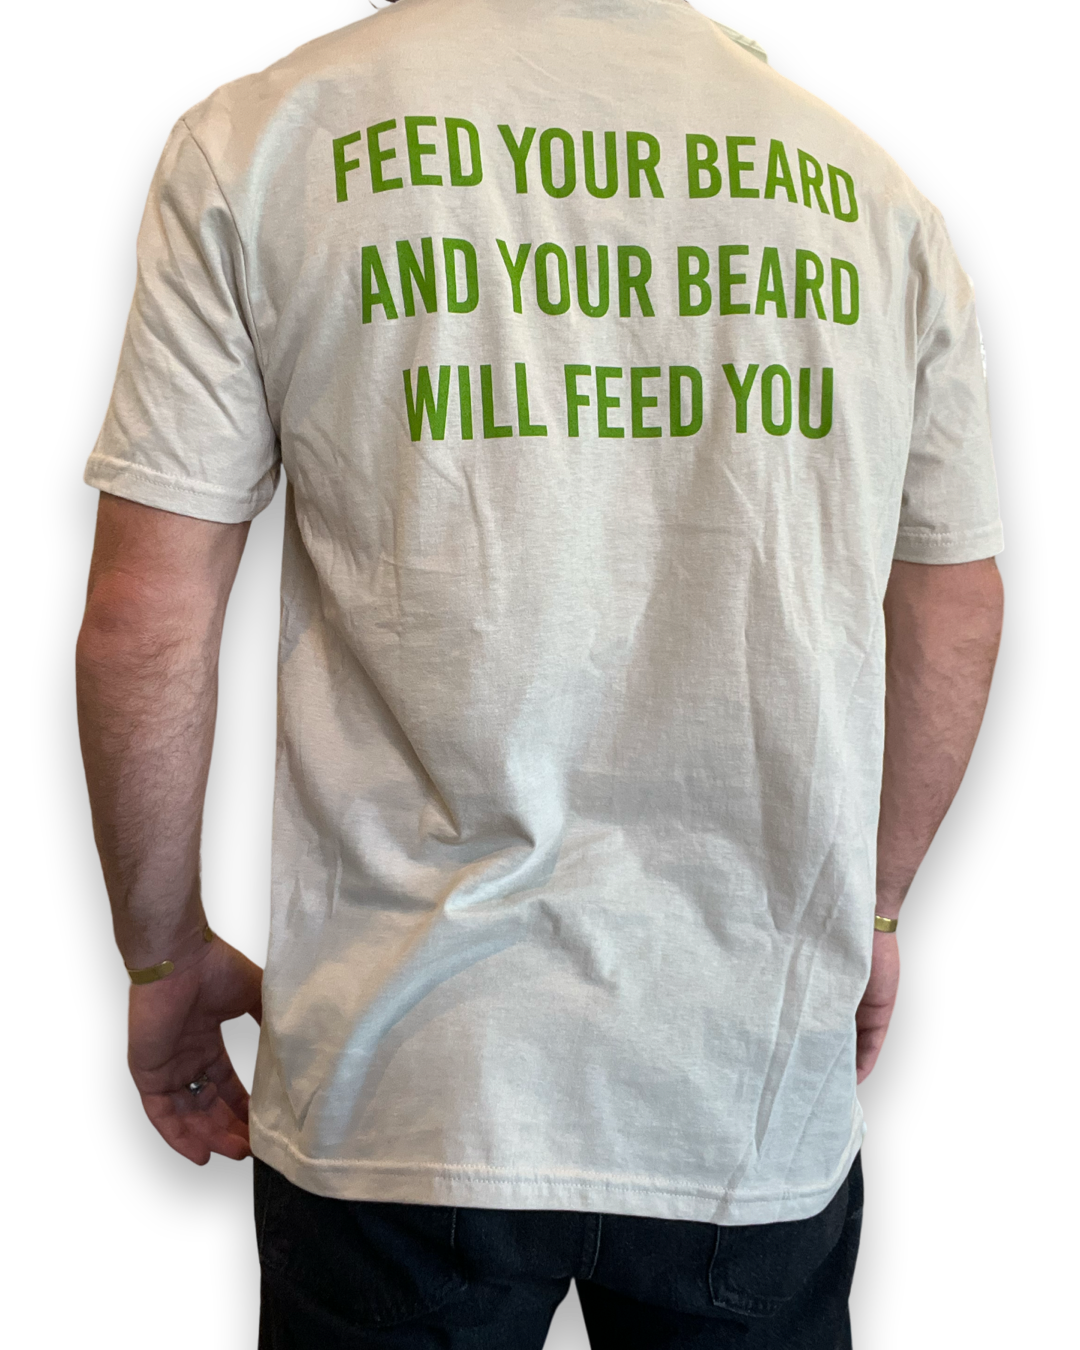 Avocado Beard Co custom T Shirt. FEED YOUR BEARD